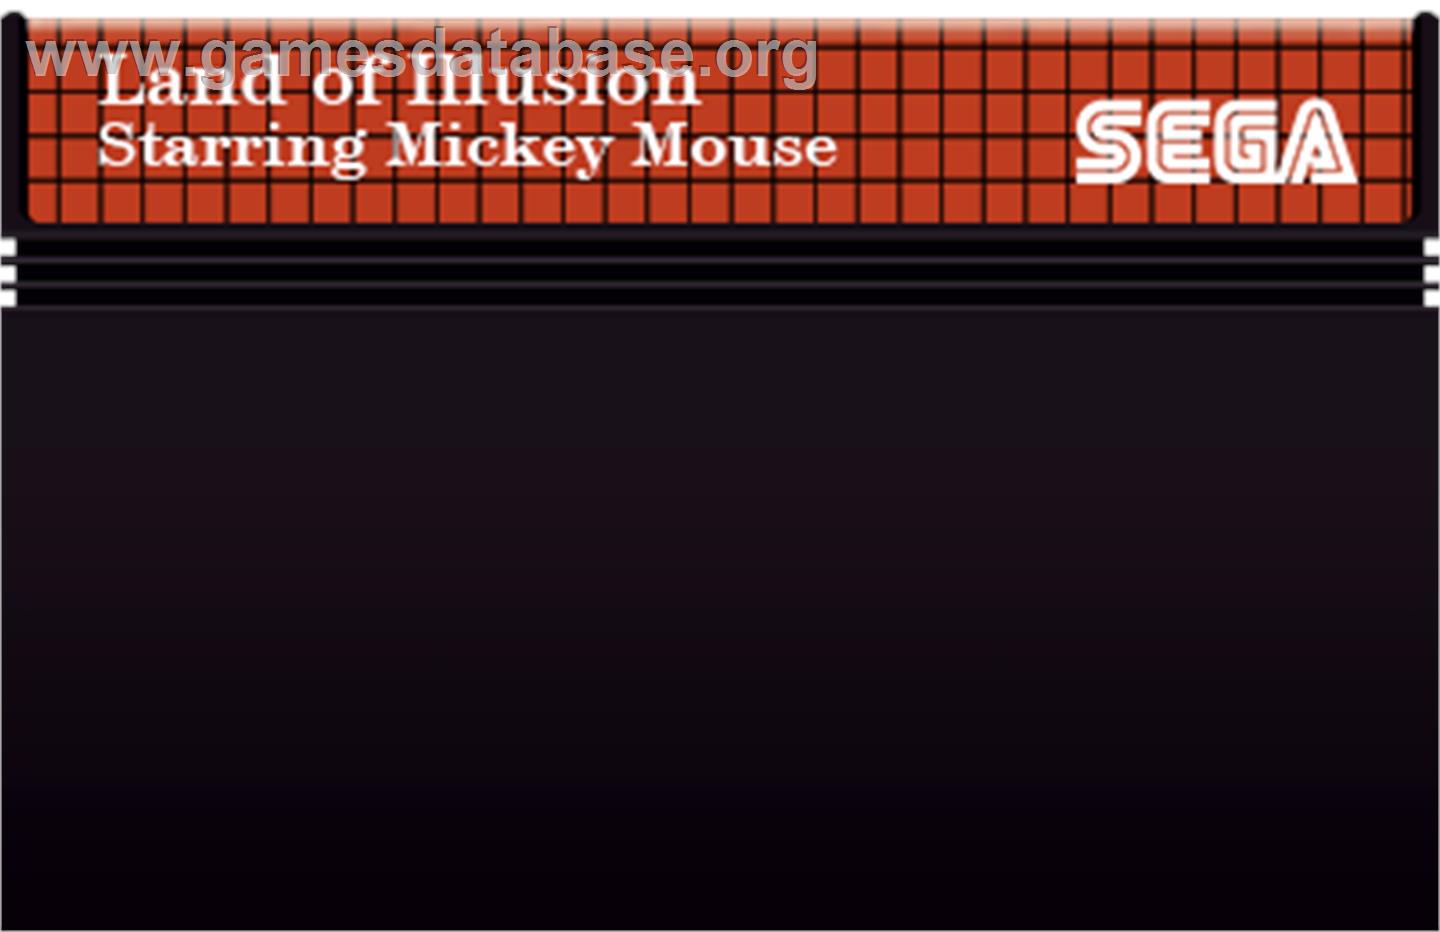 Land of Illusion starring Mickey Mouse - Sega Master System - Artwork - Cartridge